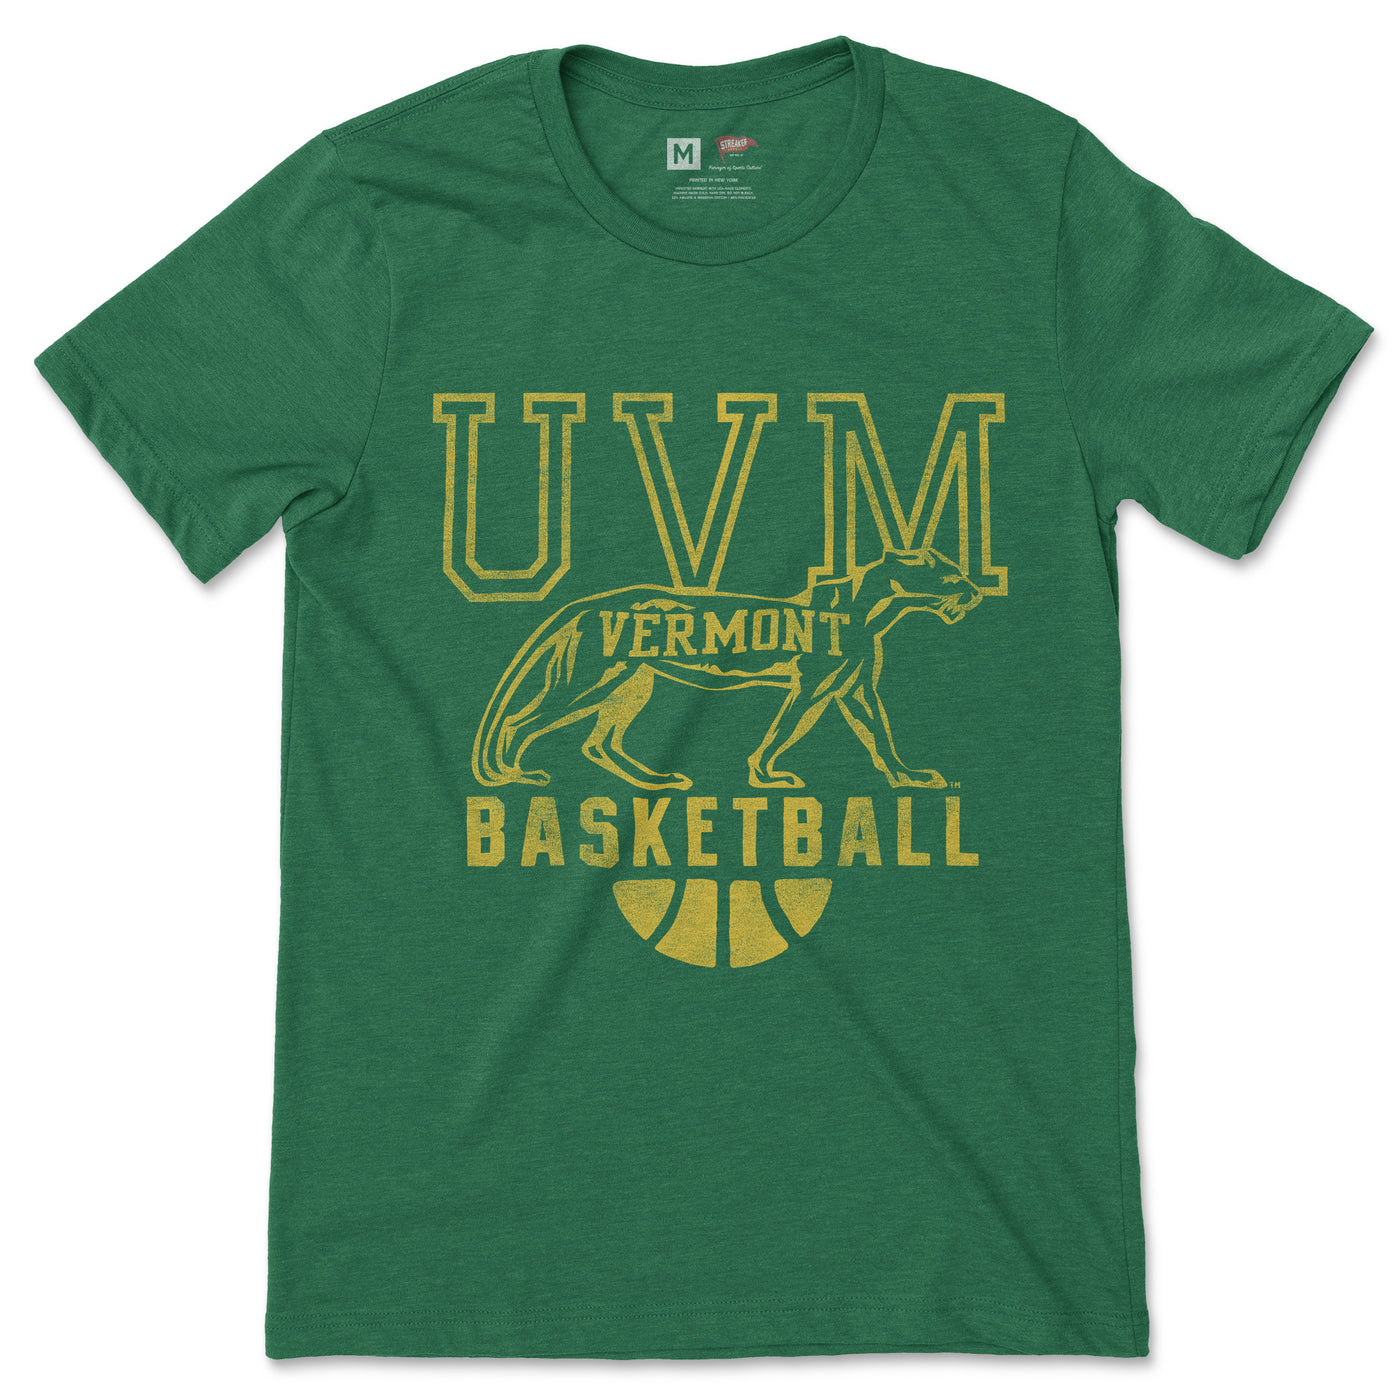 University of Vermont Vintage Basketball Tee - Streaker Sports